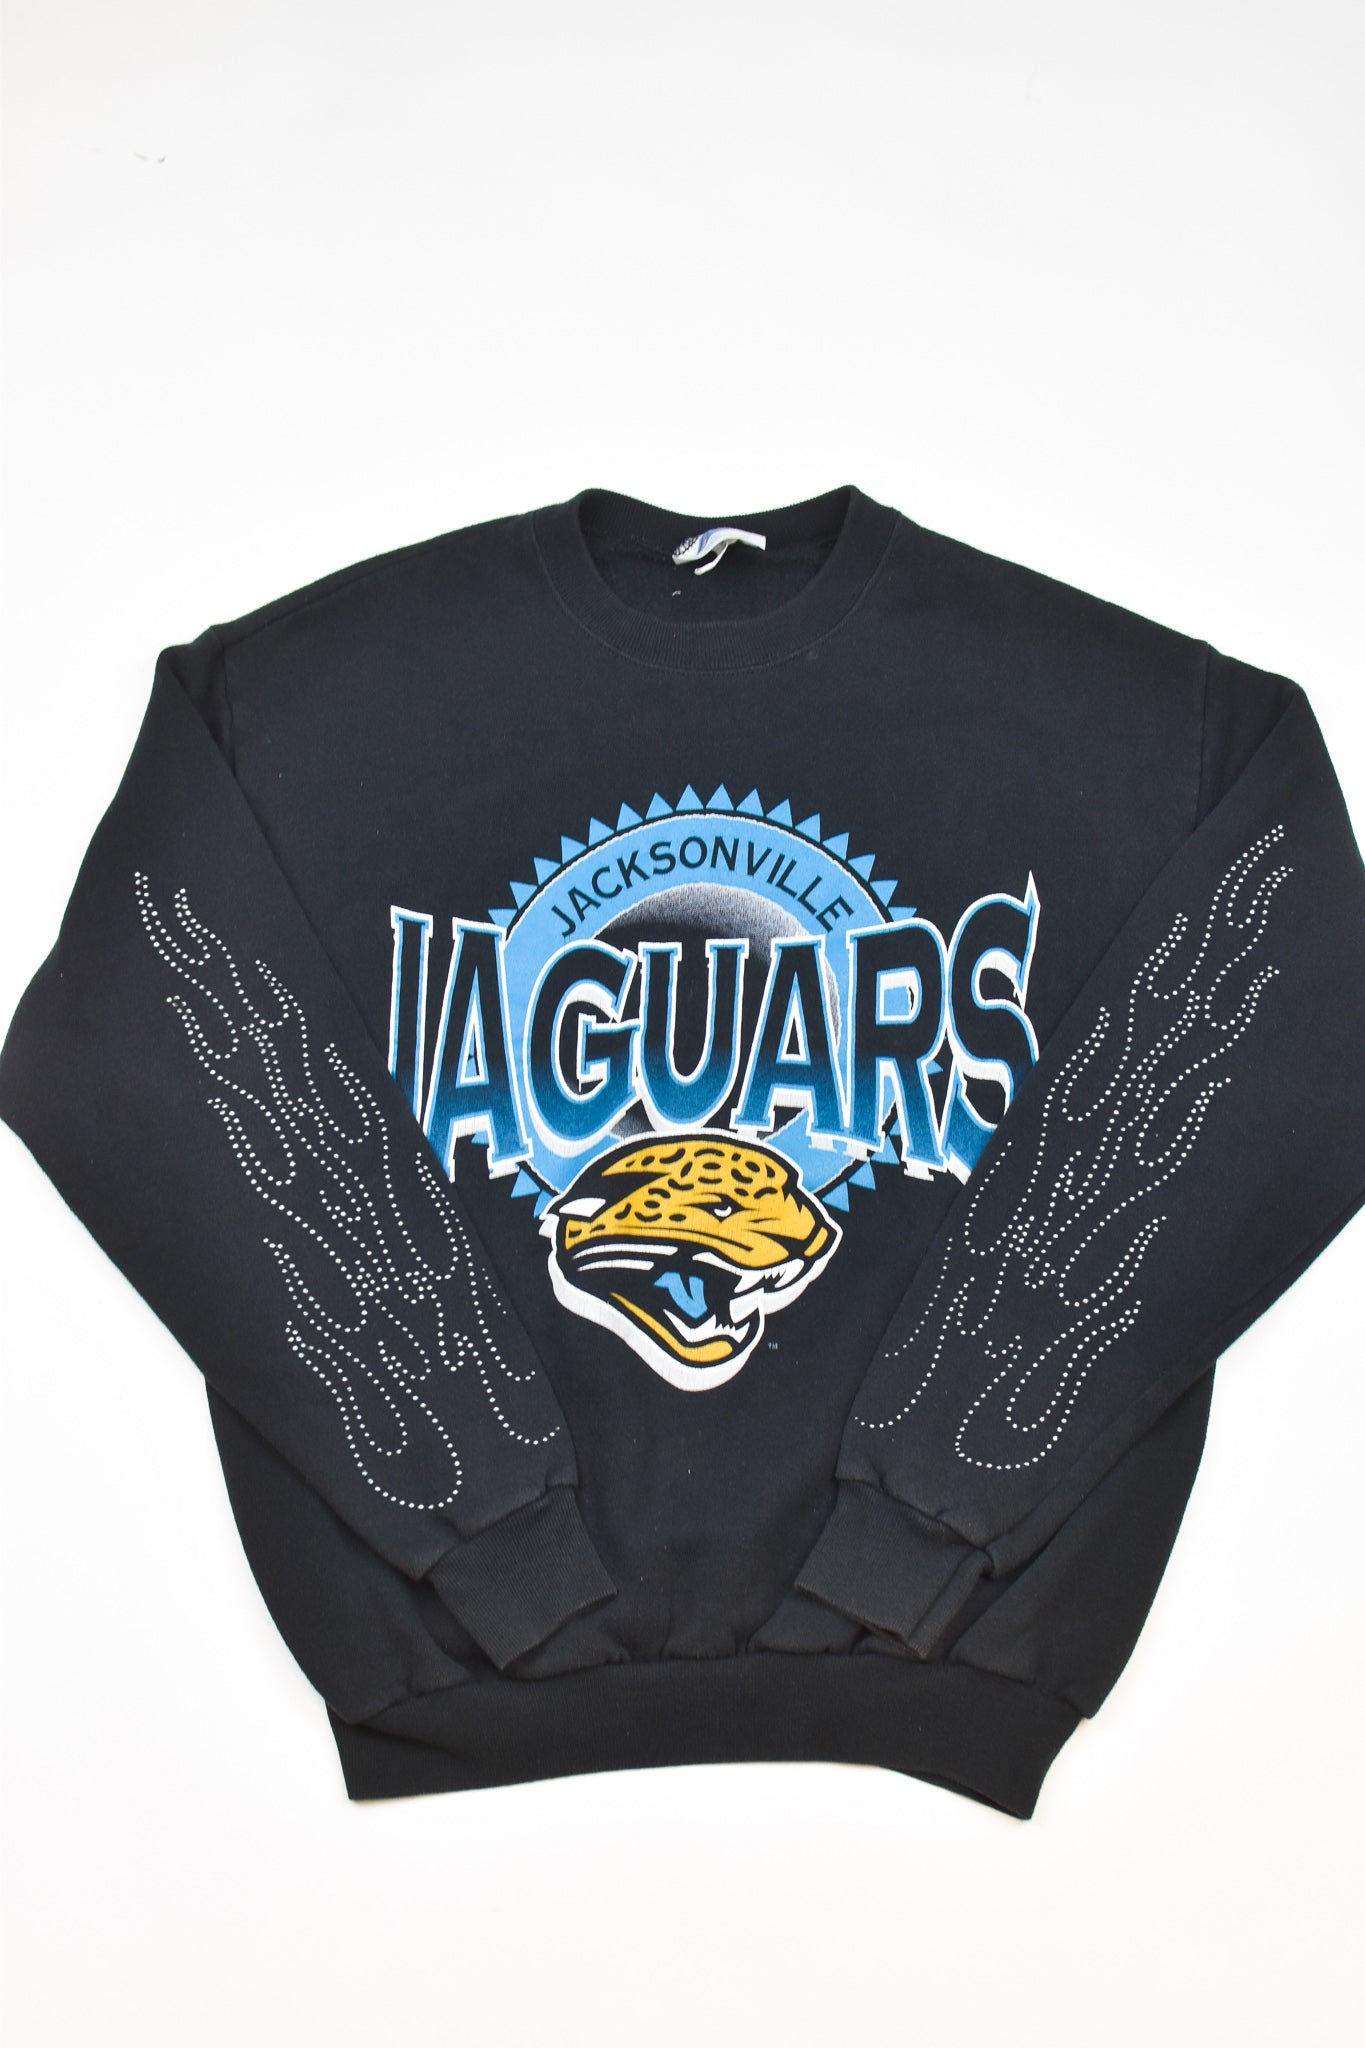 Upcycled Vintage Jaguars Flame Sweatshirt